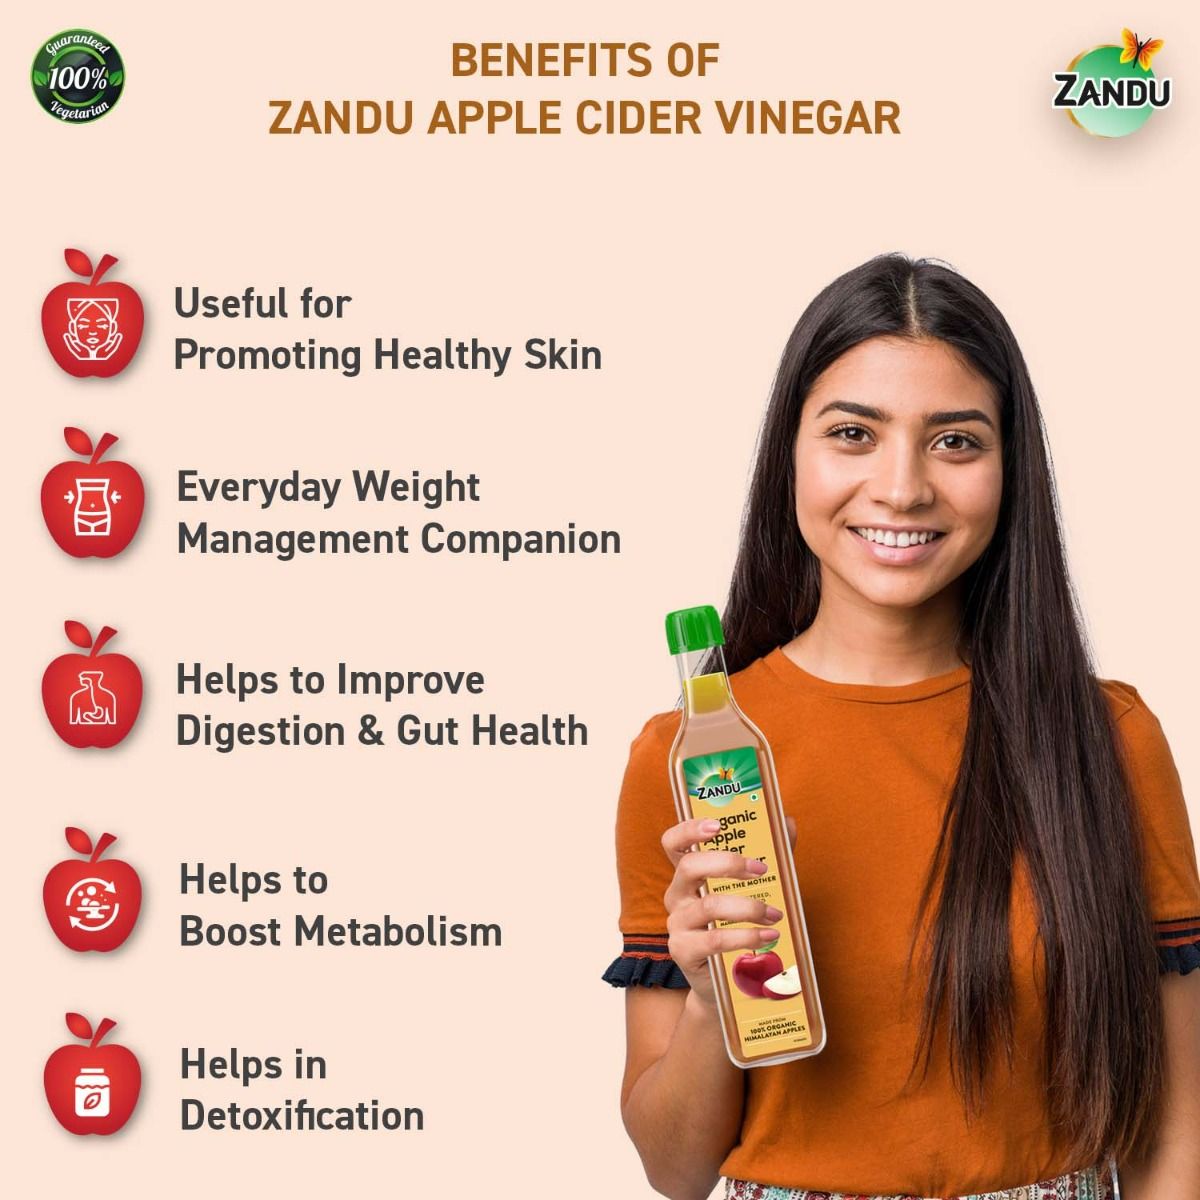 Zandu Organic Apple Cider Vinegar, 500 ml, Pack of 1 